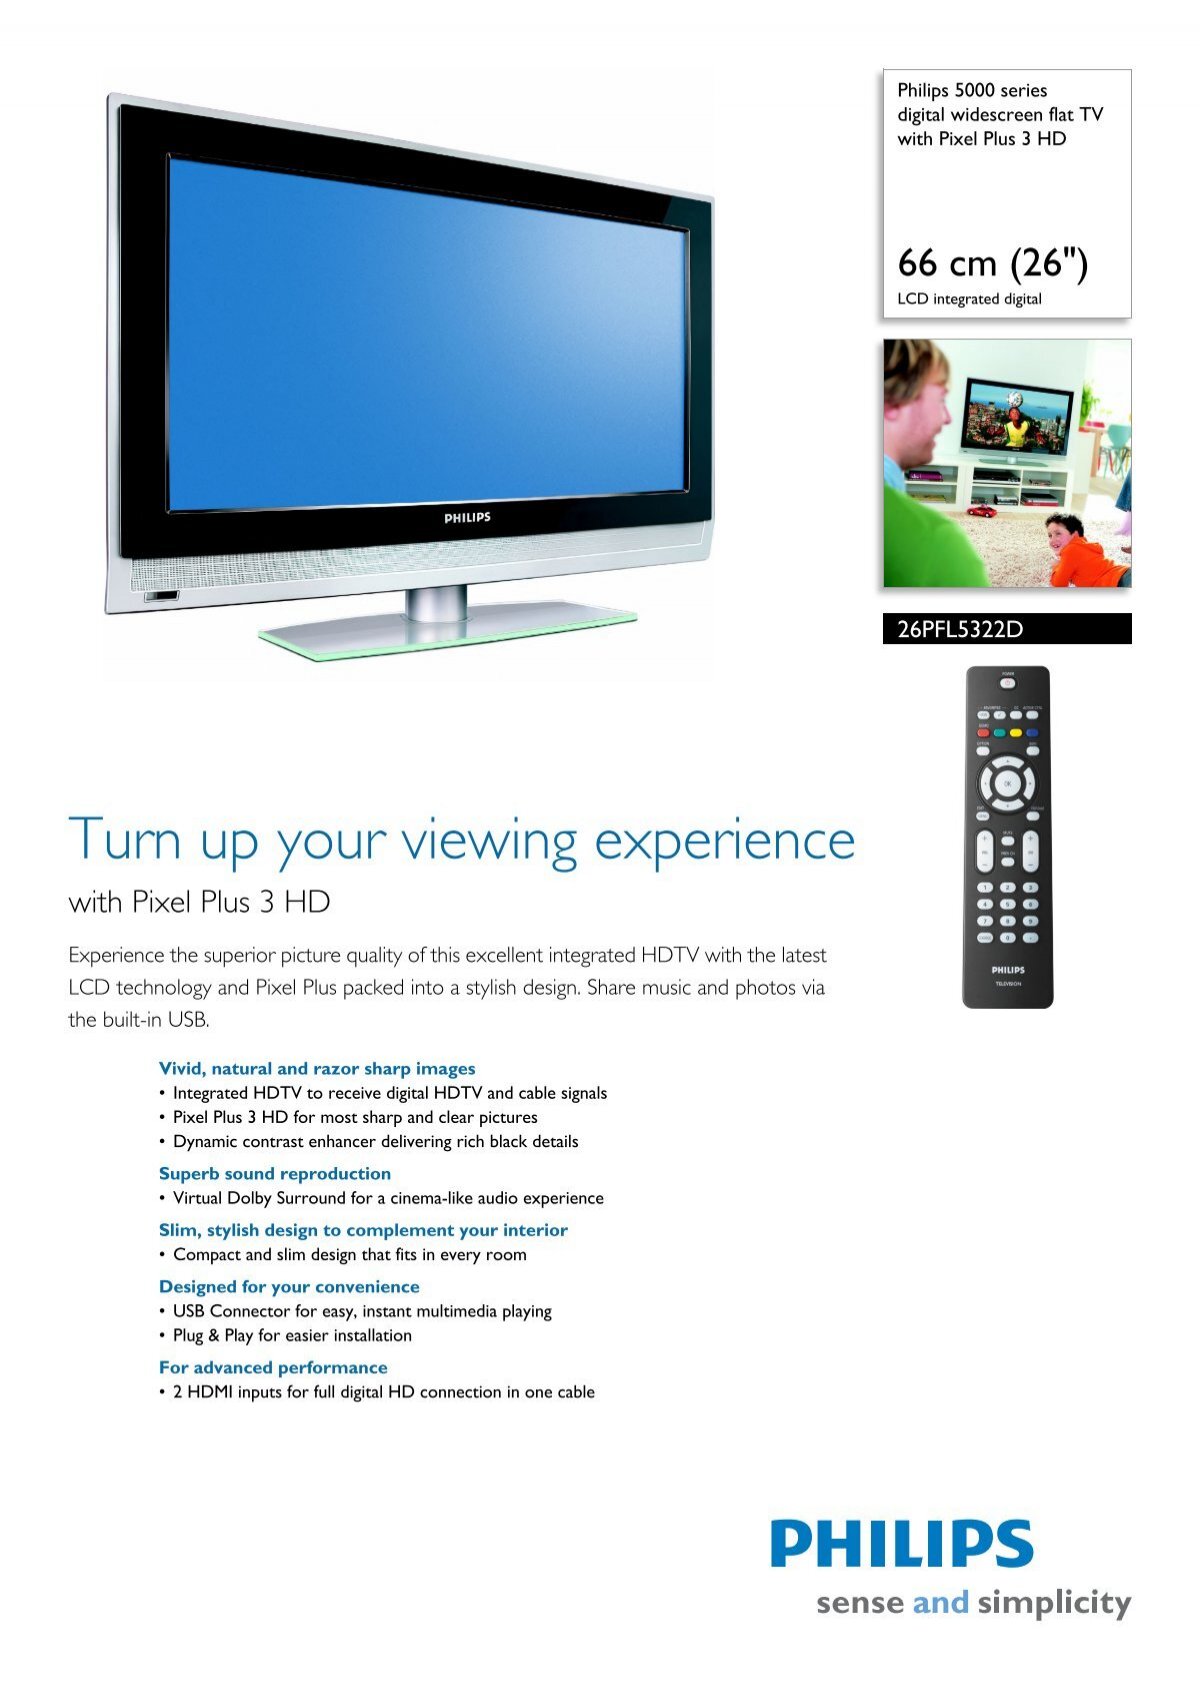 Philips Digital Widescreen Flat Tv Leaflet Aen 9770